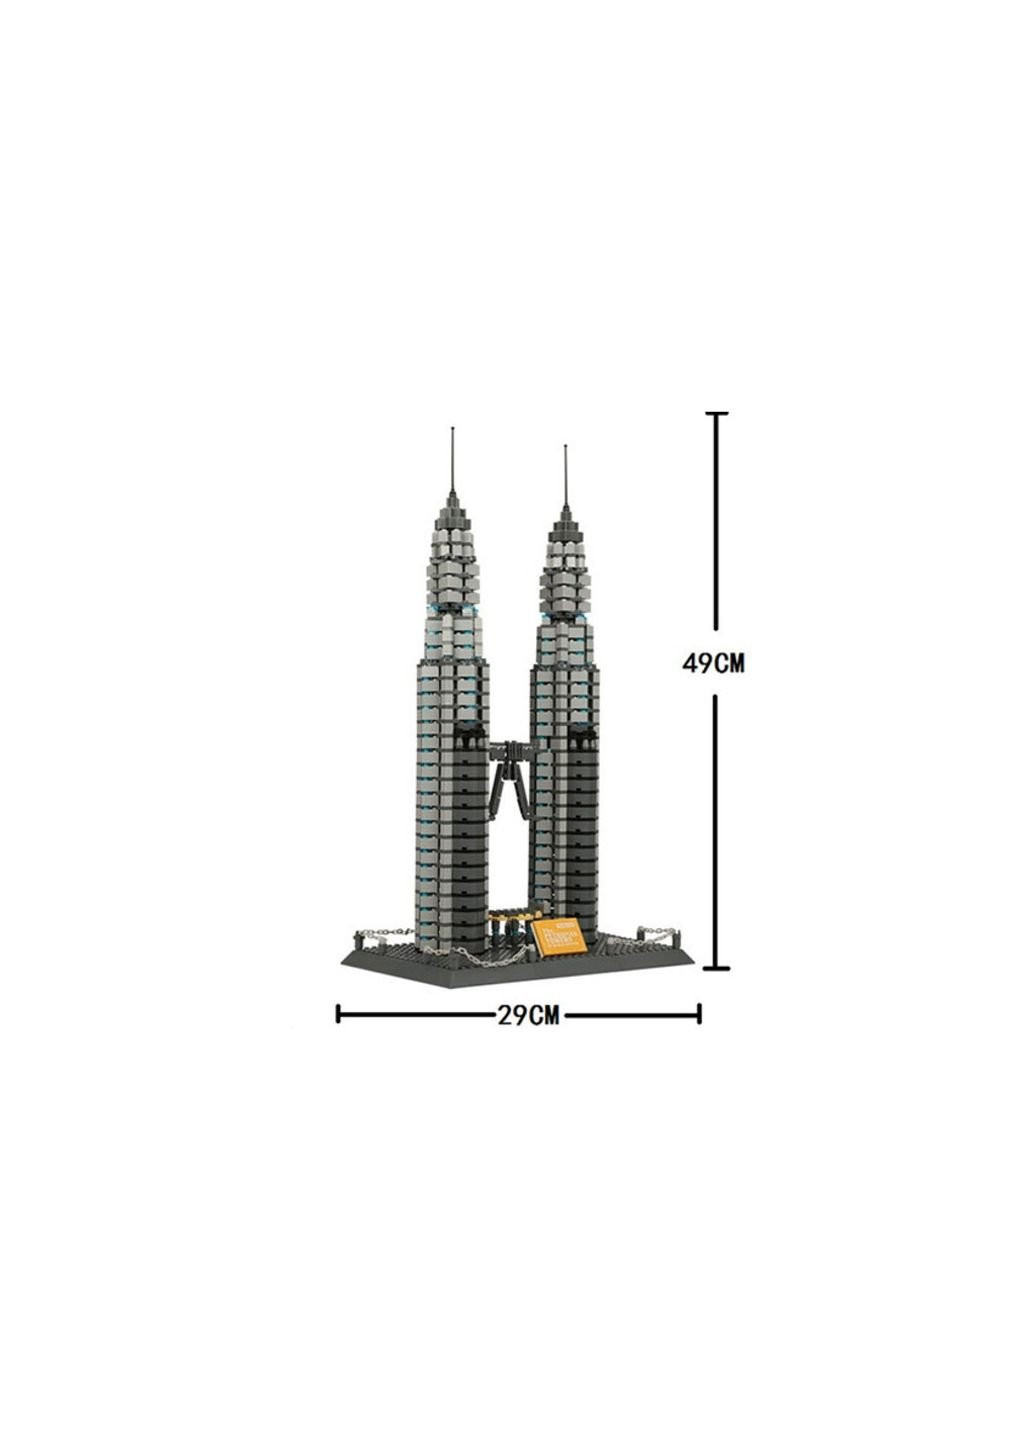 Конструктор Башни Петронас, Малайзия (WNG-Petronas-Towers) Wange (254053772)